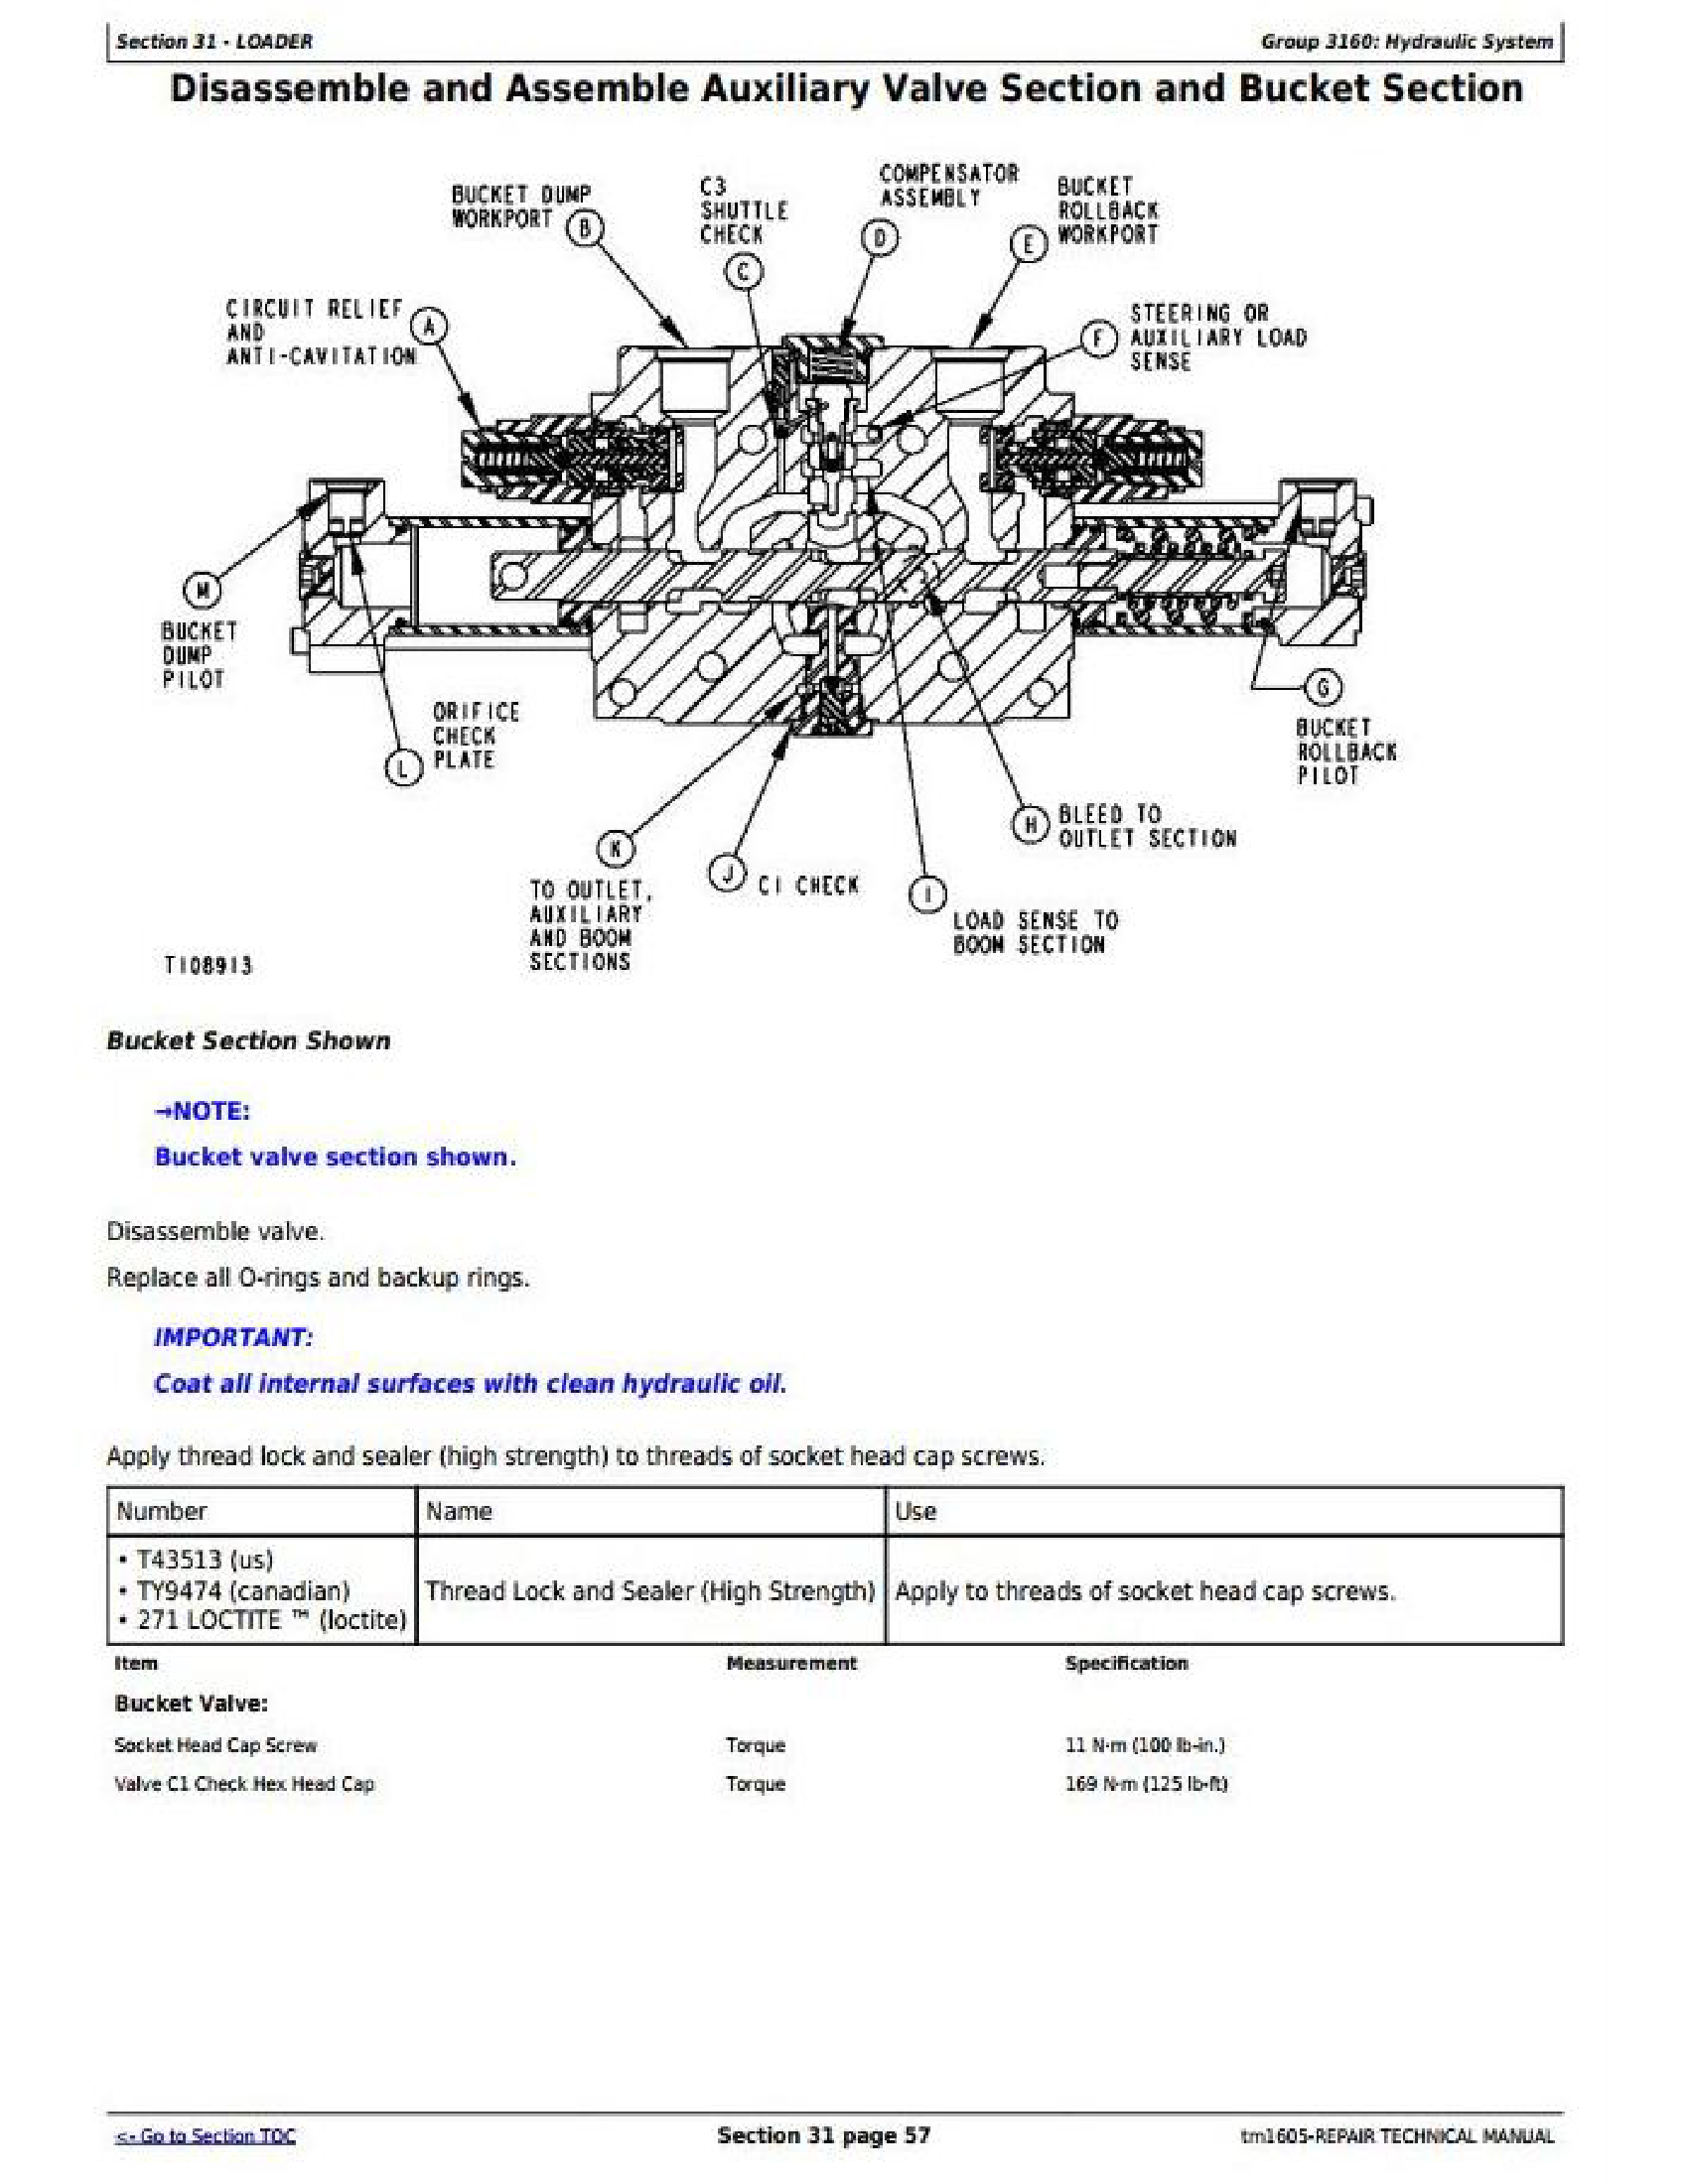 John Deere TC54H manual pdf